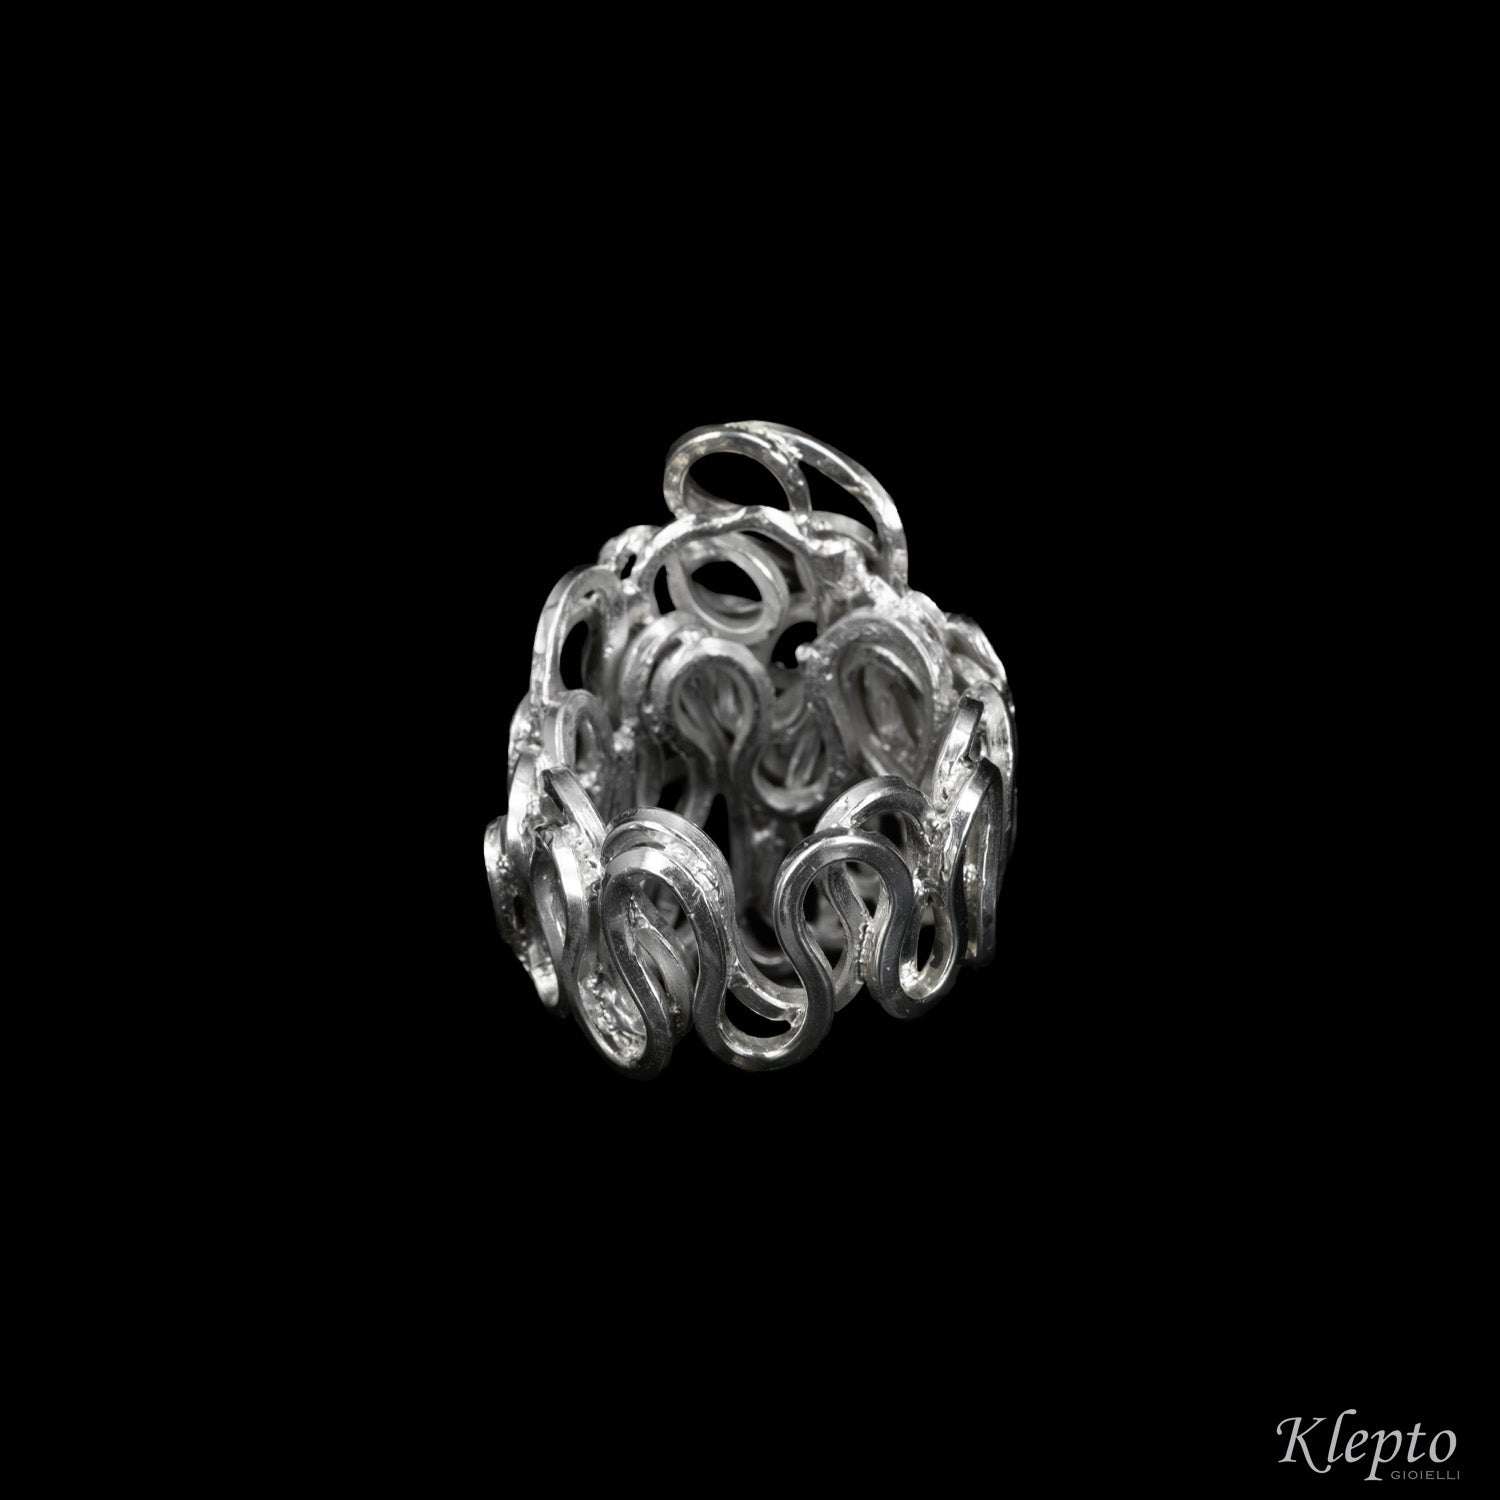 Silnova® braided wire silver ring